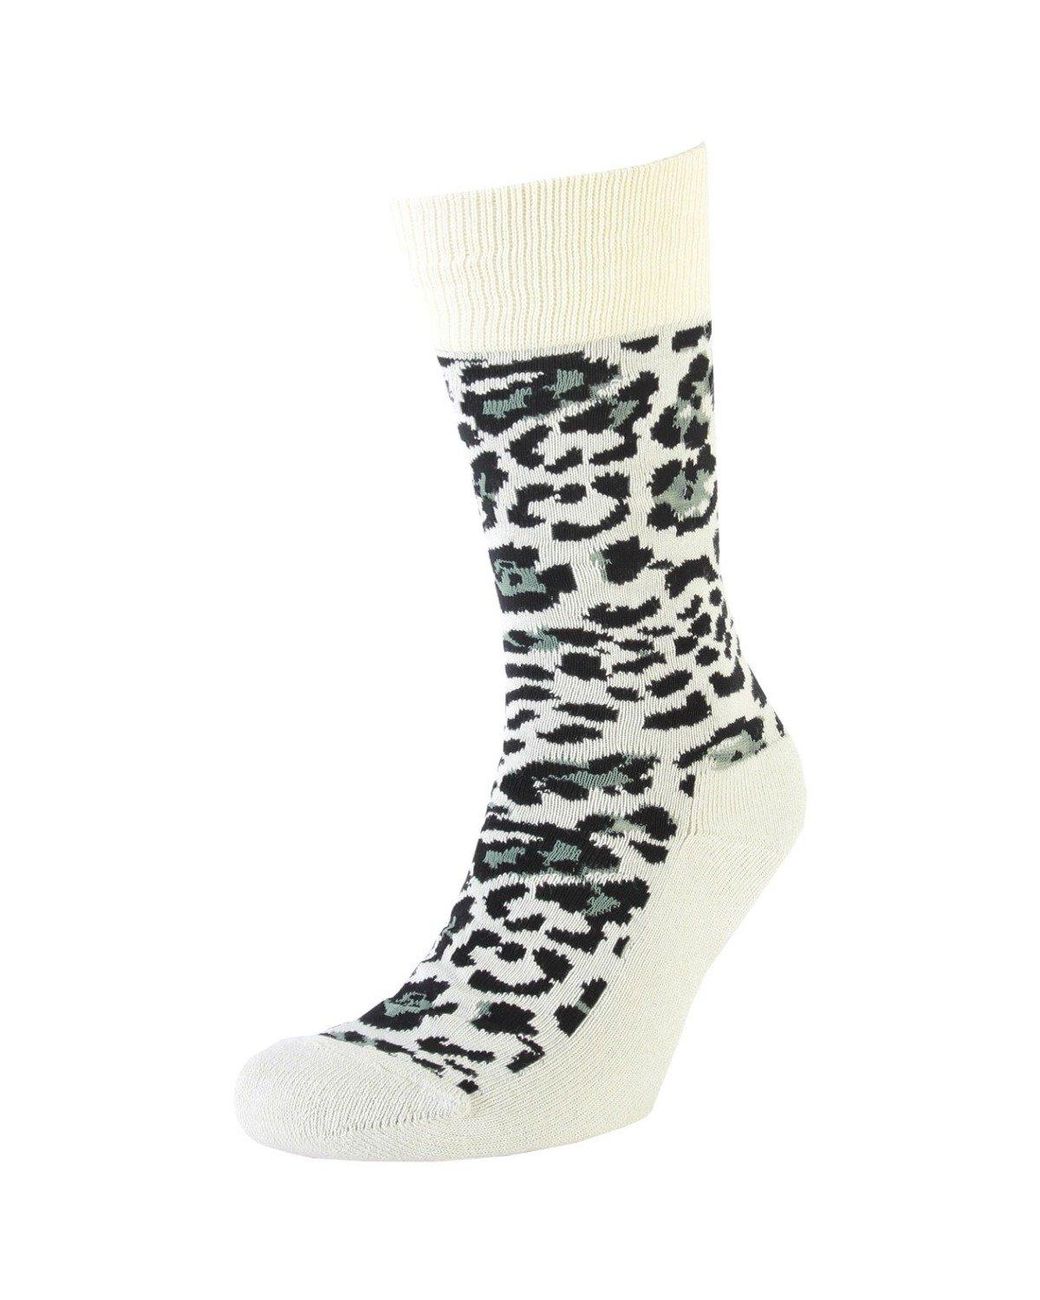 Yohji Yamamoto Hh-m03-972 Leopard Socks in Natural for Men - Lyst